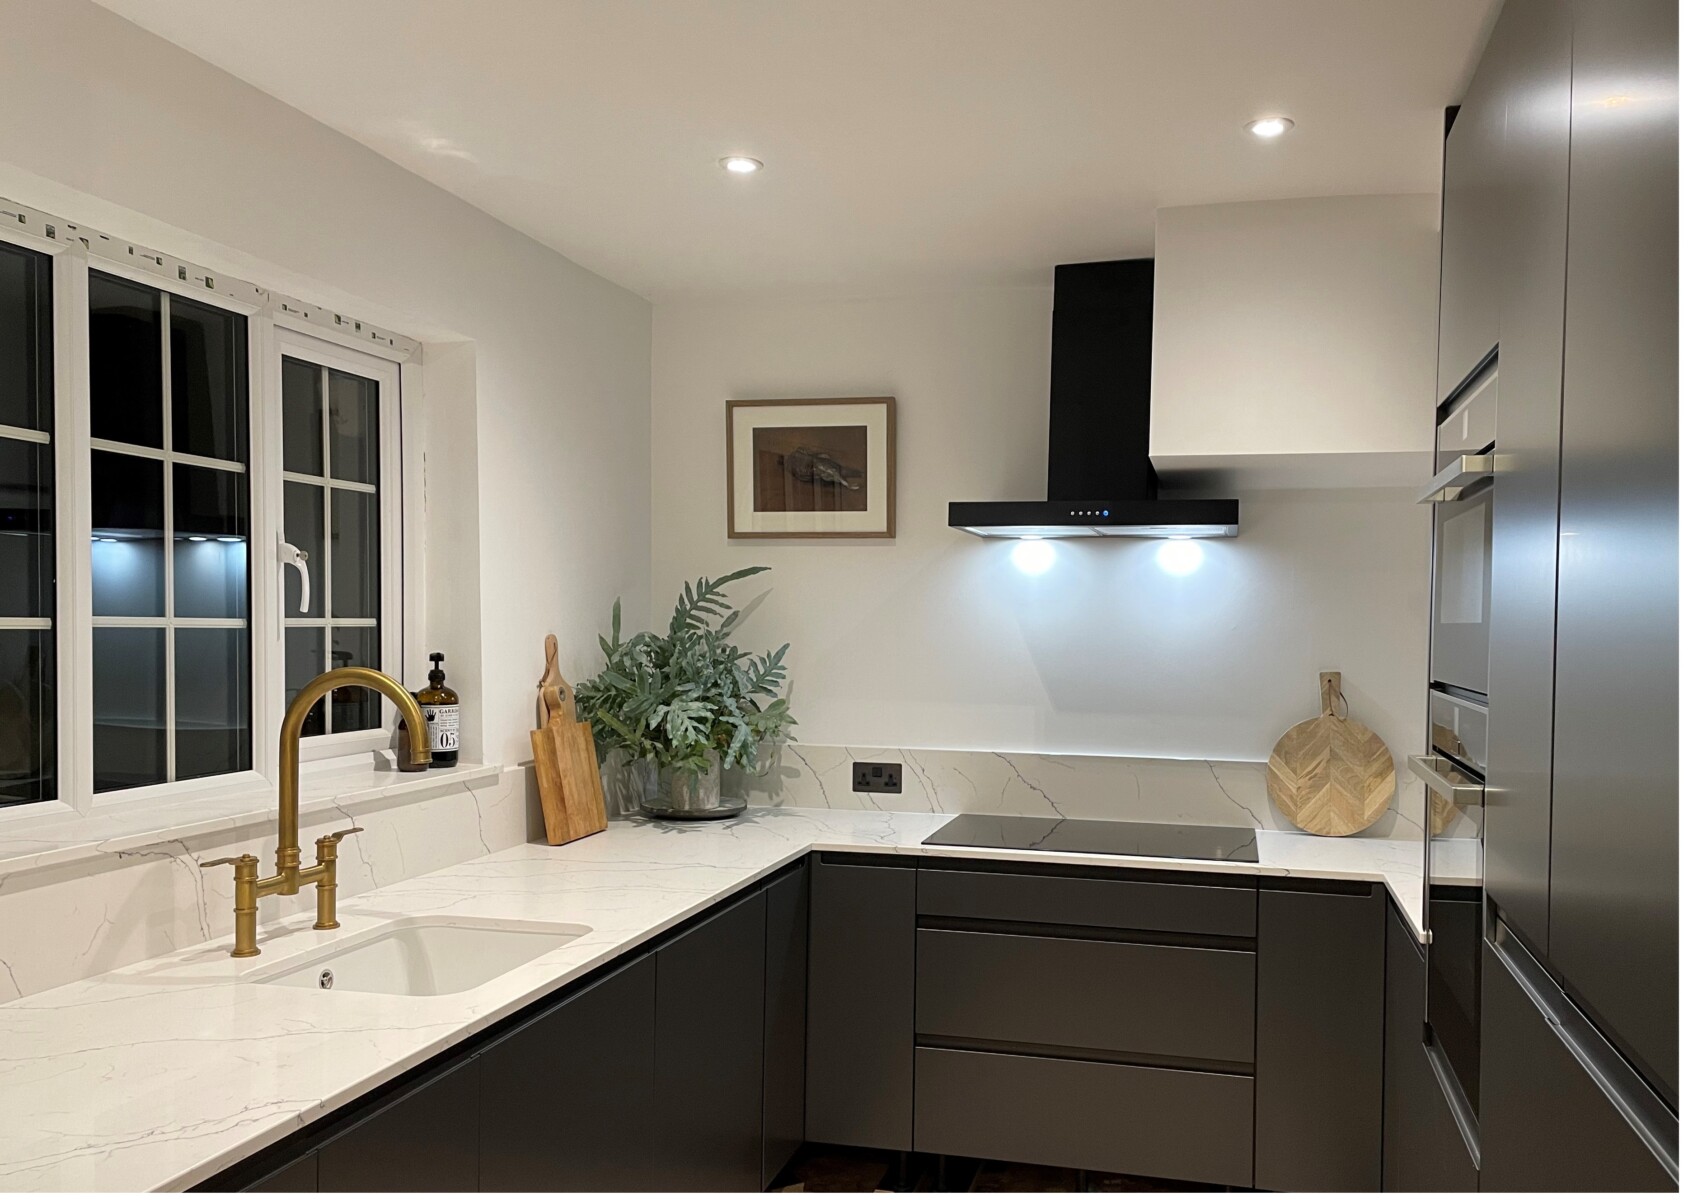 Somerset kitchen, flooring & bathroom renovations. Quartz, marble, limestone and granite supplied by Landford Stone, Wiltshire.